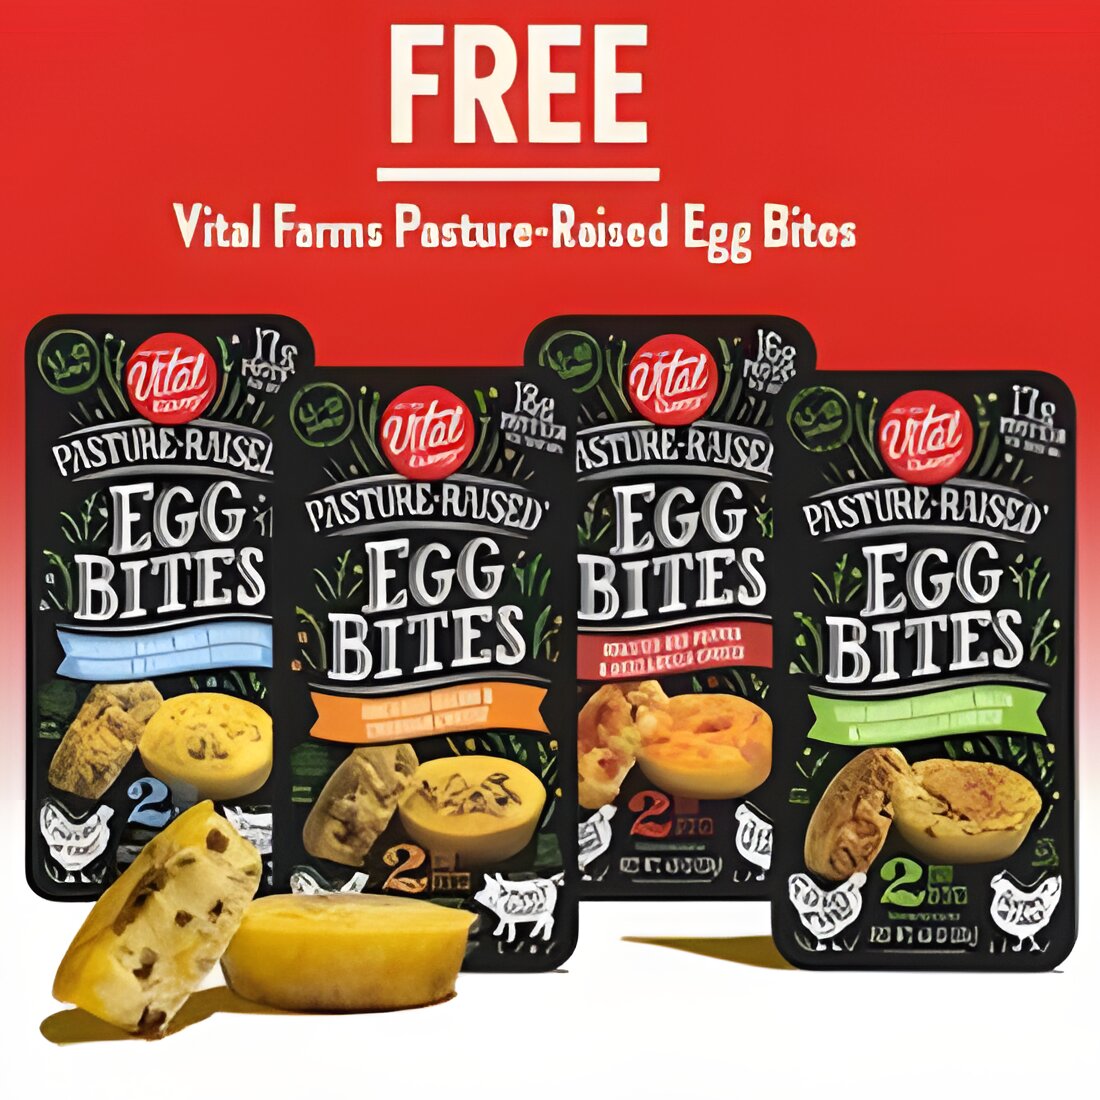 Free Vital Farms Pasture-Raised Egg Bites Product